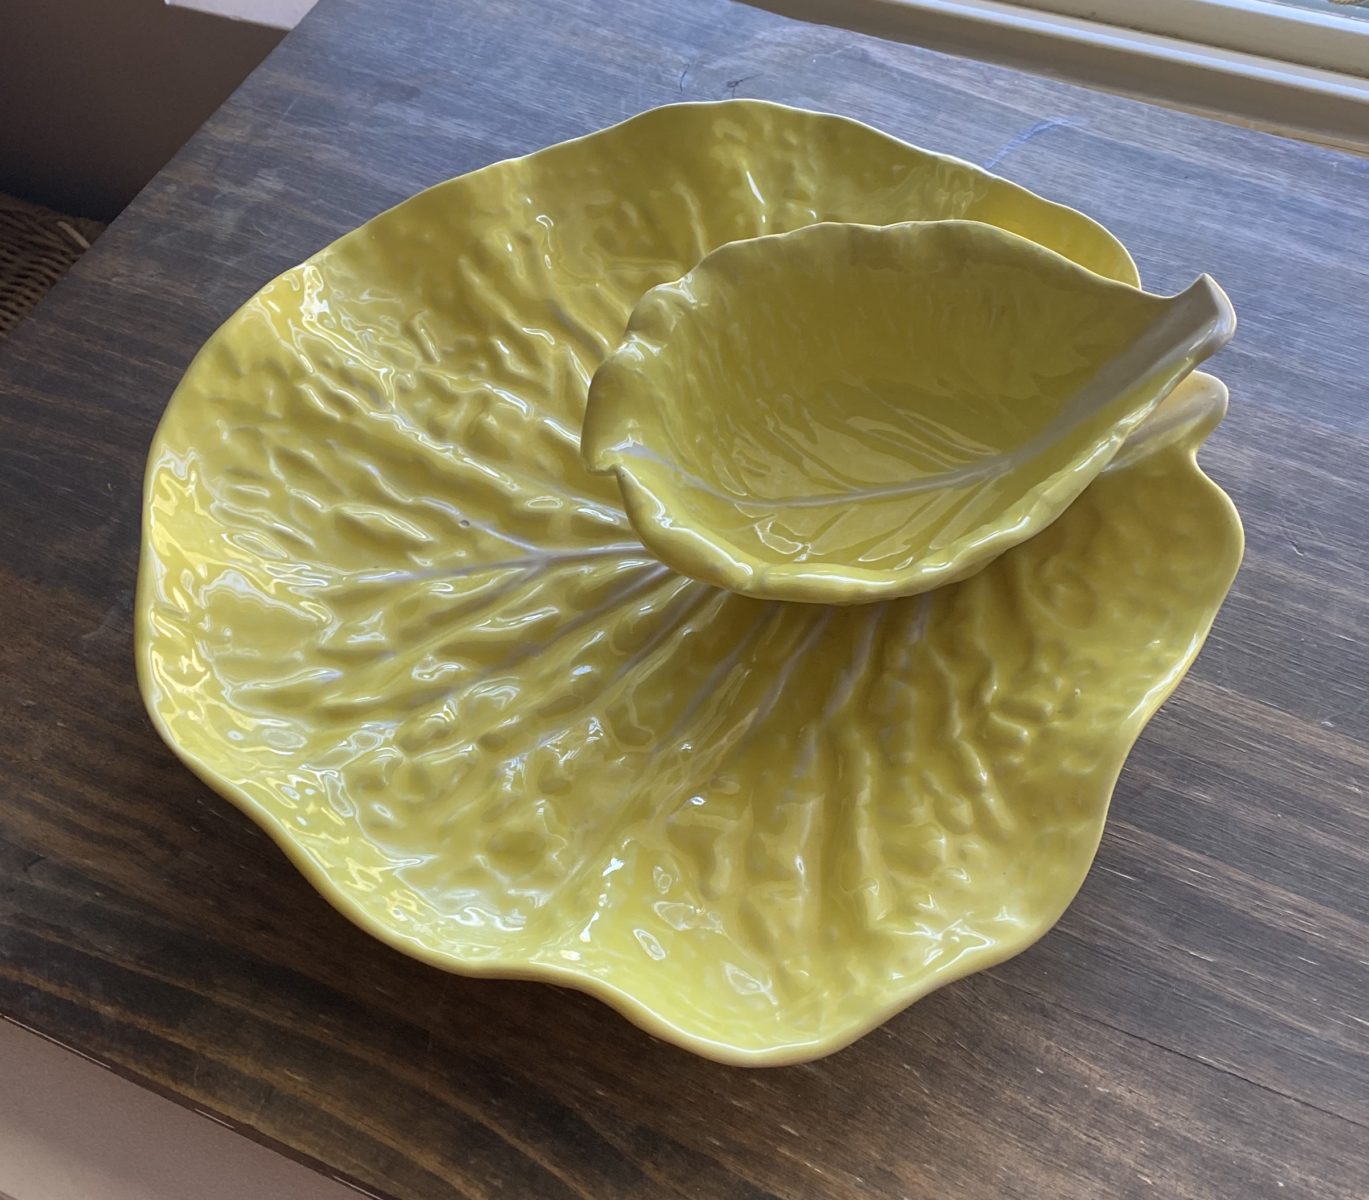 The yellow Dish